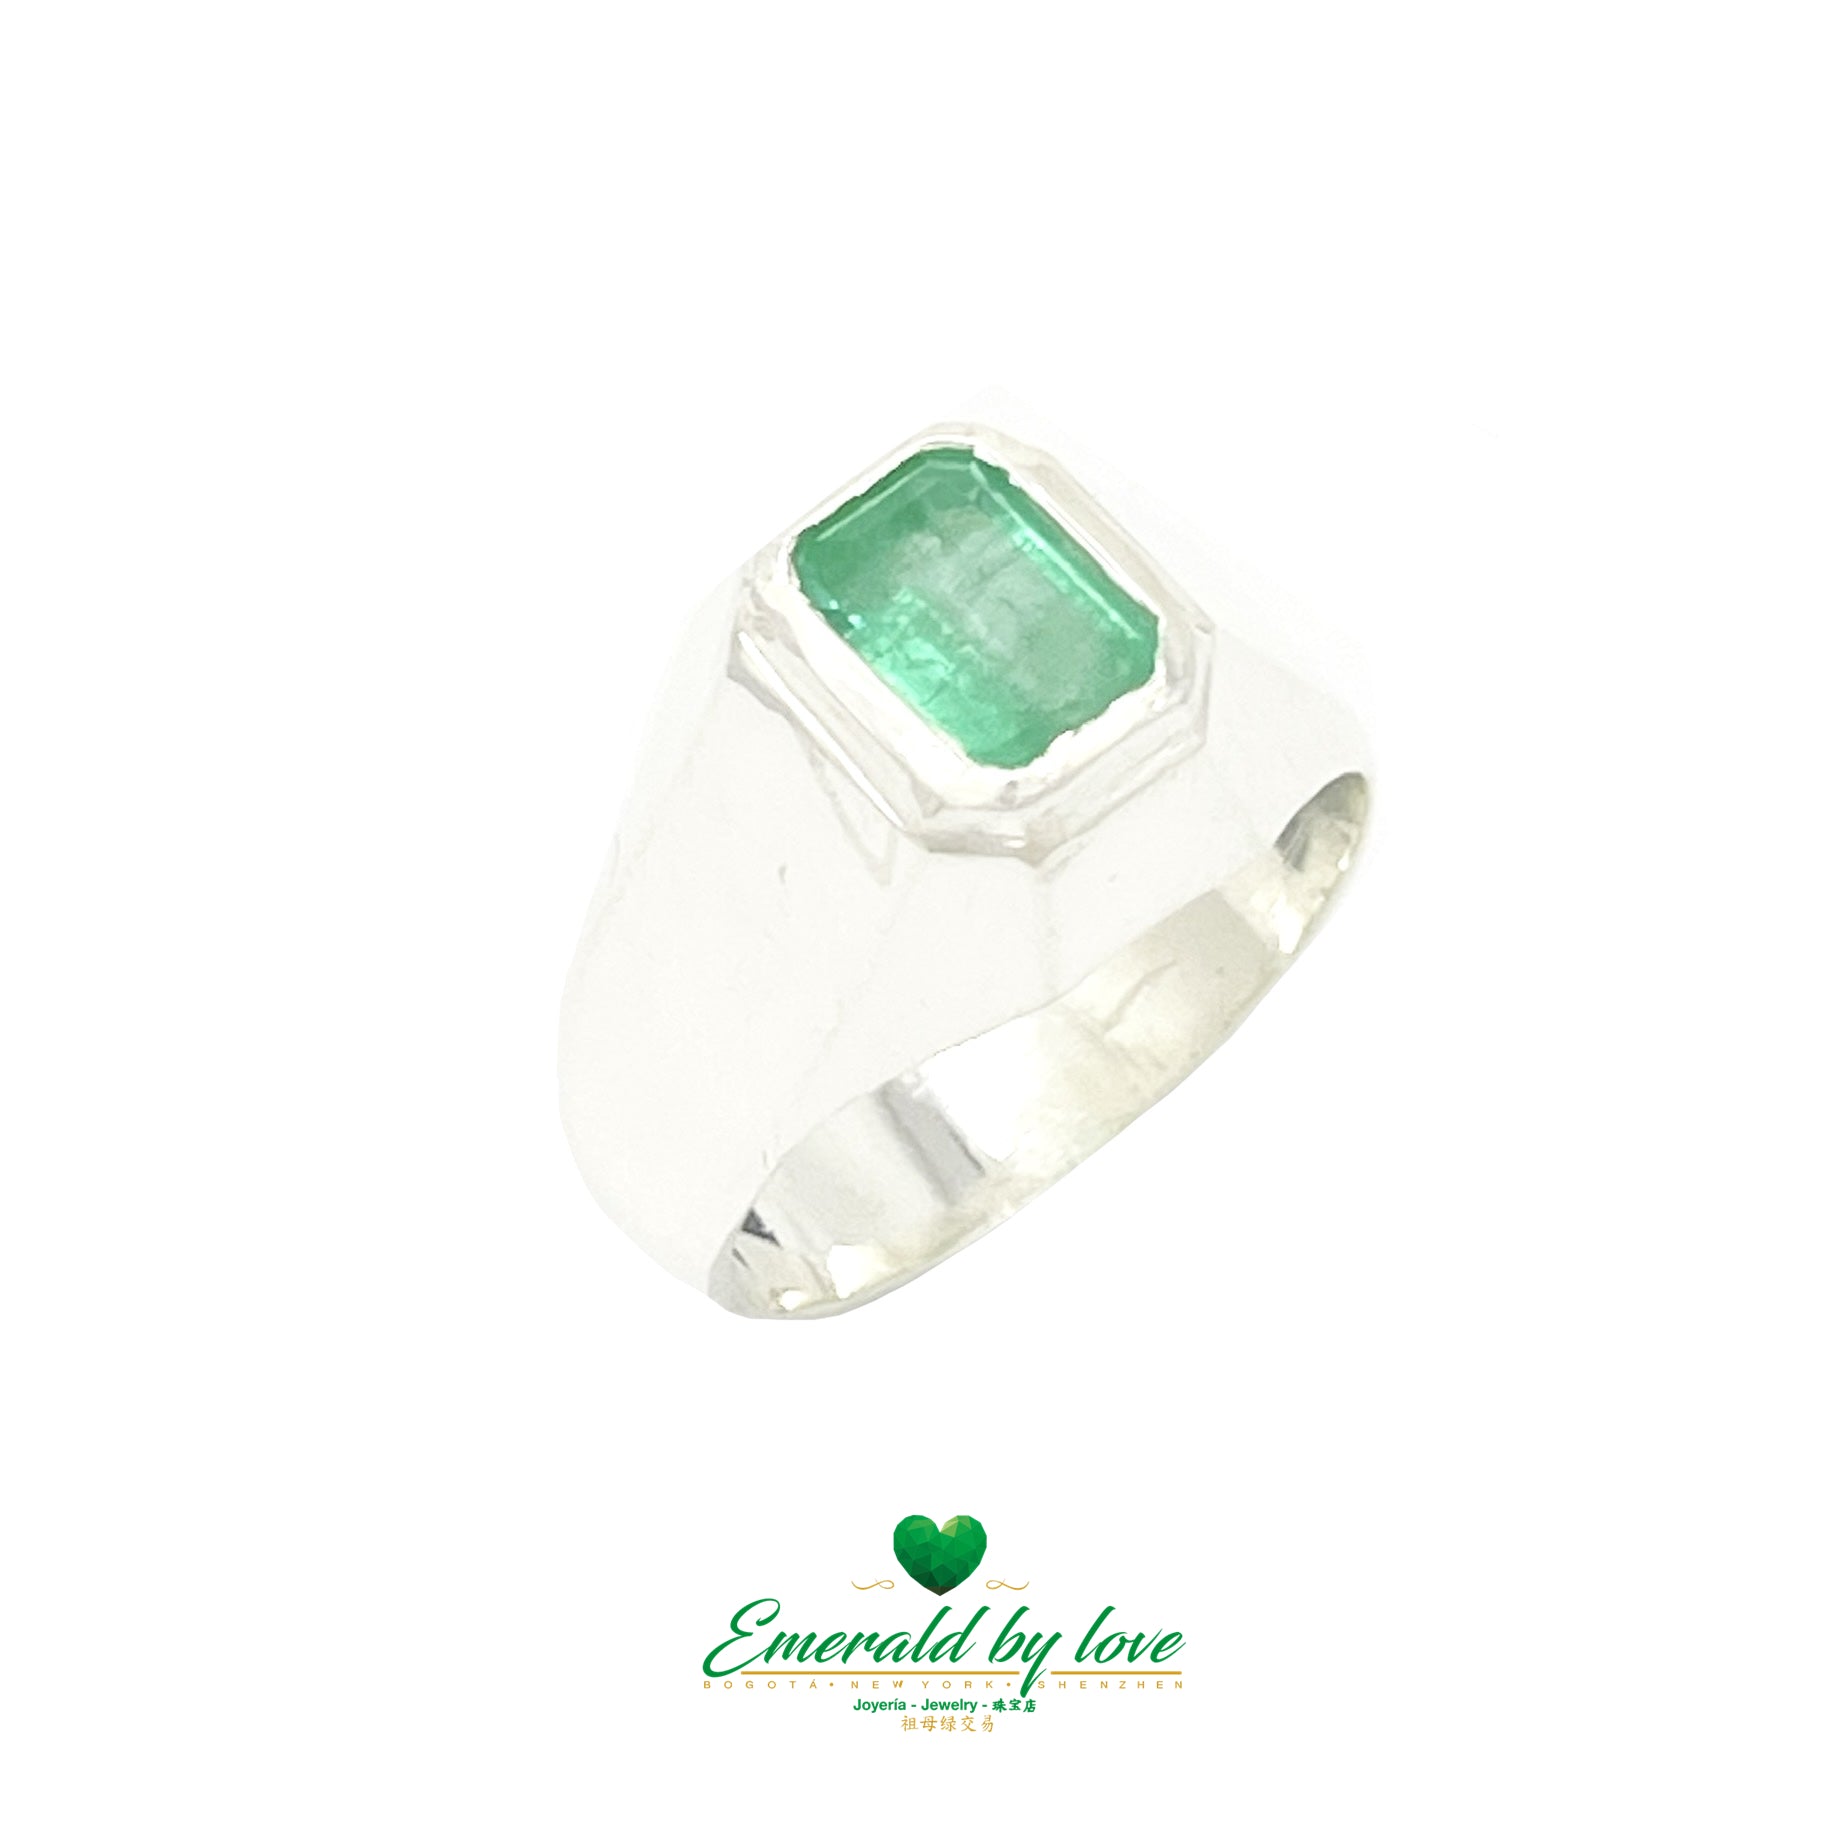 Sophisticated Men's Sterling Silver Ring with Bezel-Set Rectangular Emerald